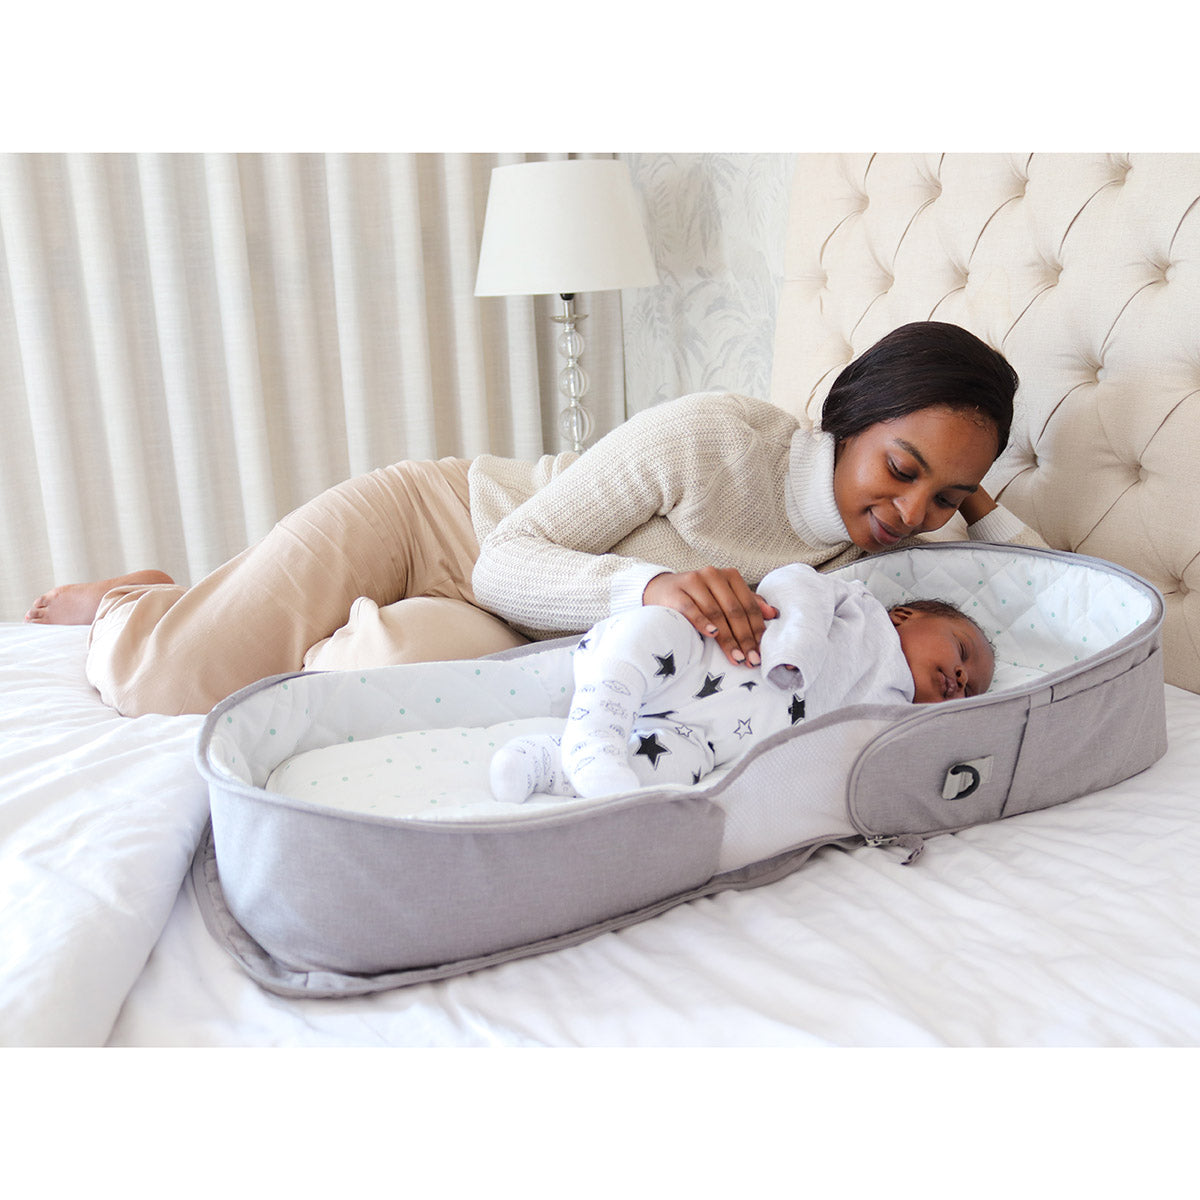 Snuggletime Travel Nest Infant Co-Sleeper with Mozzi Net